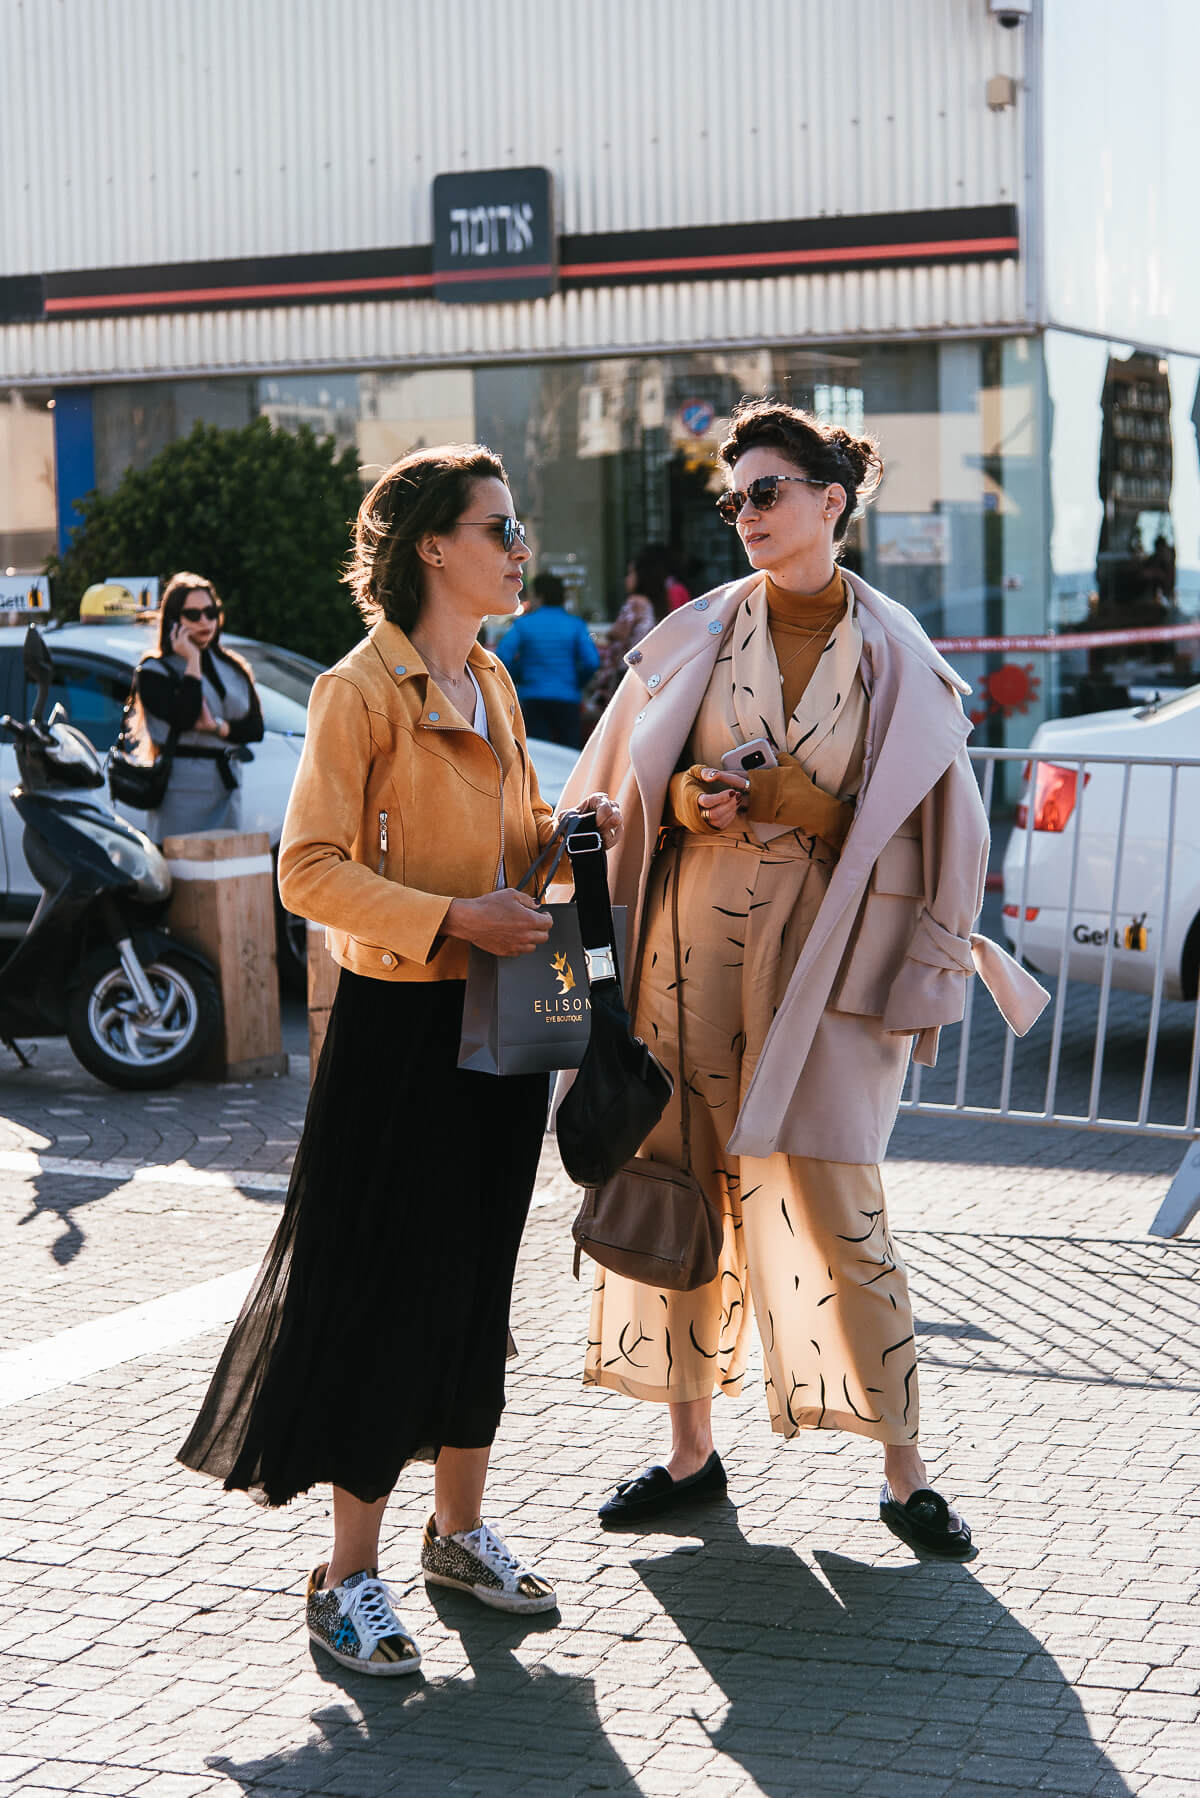 Tel Aviv Fashion Week 2019 - eemzot blog